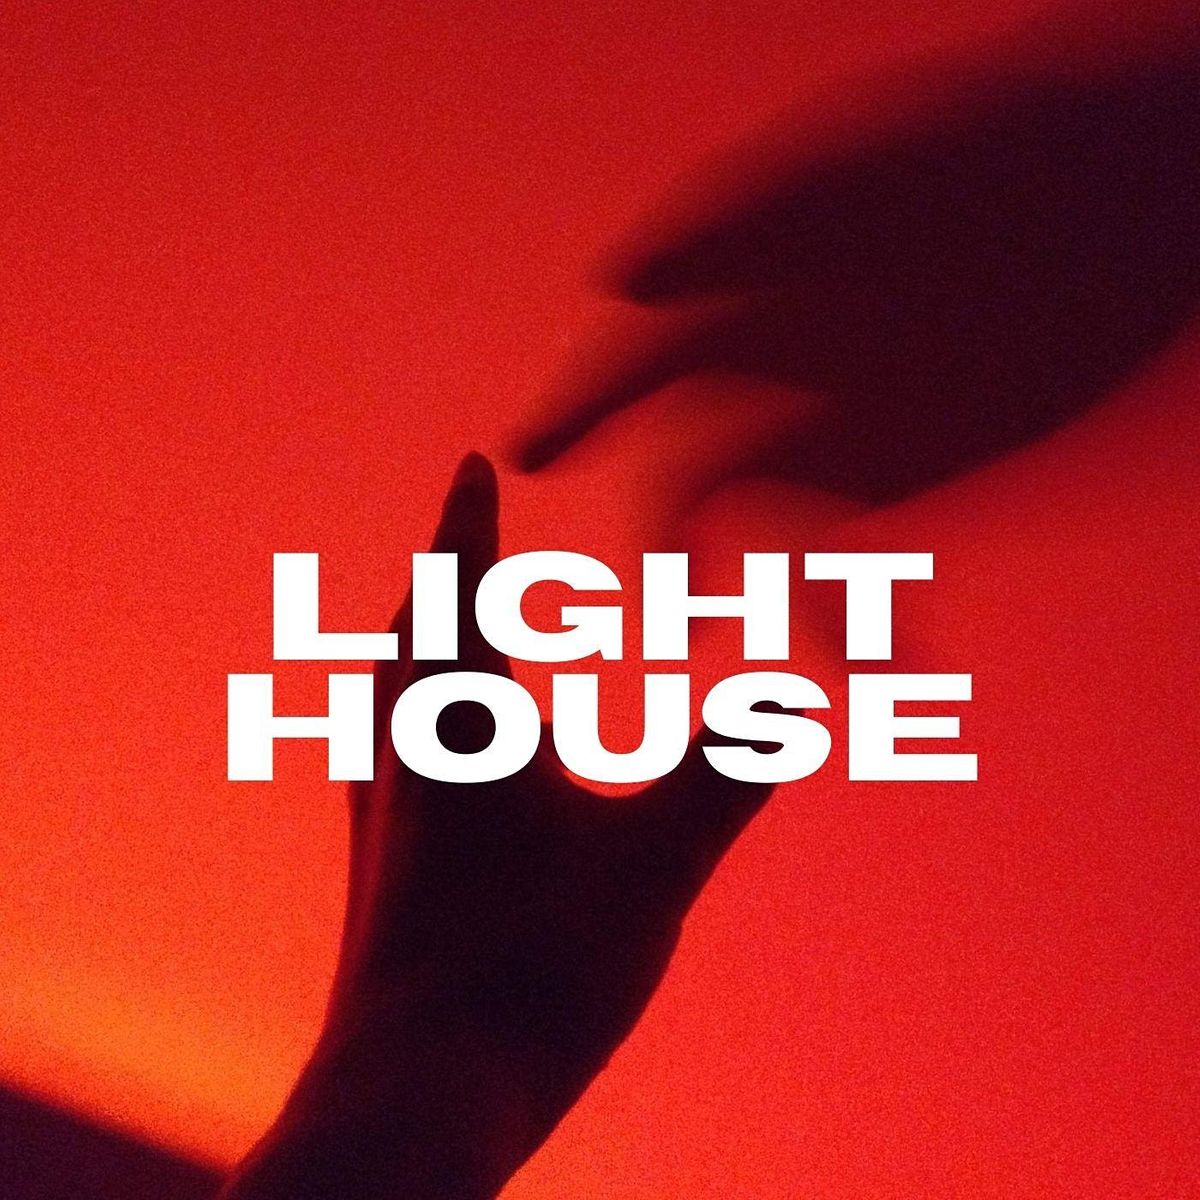 THE LIGHT HOUSE